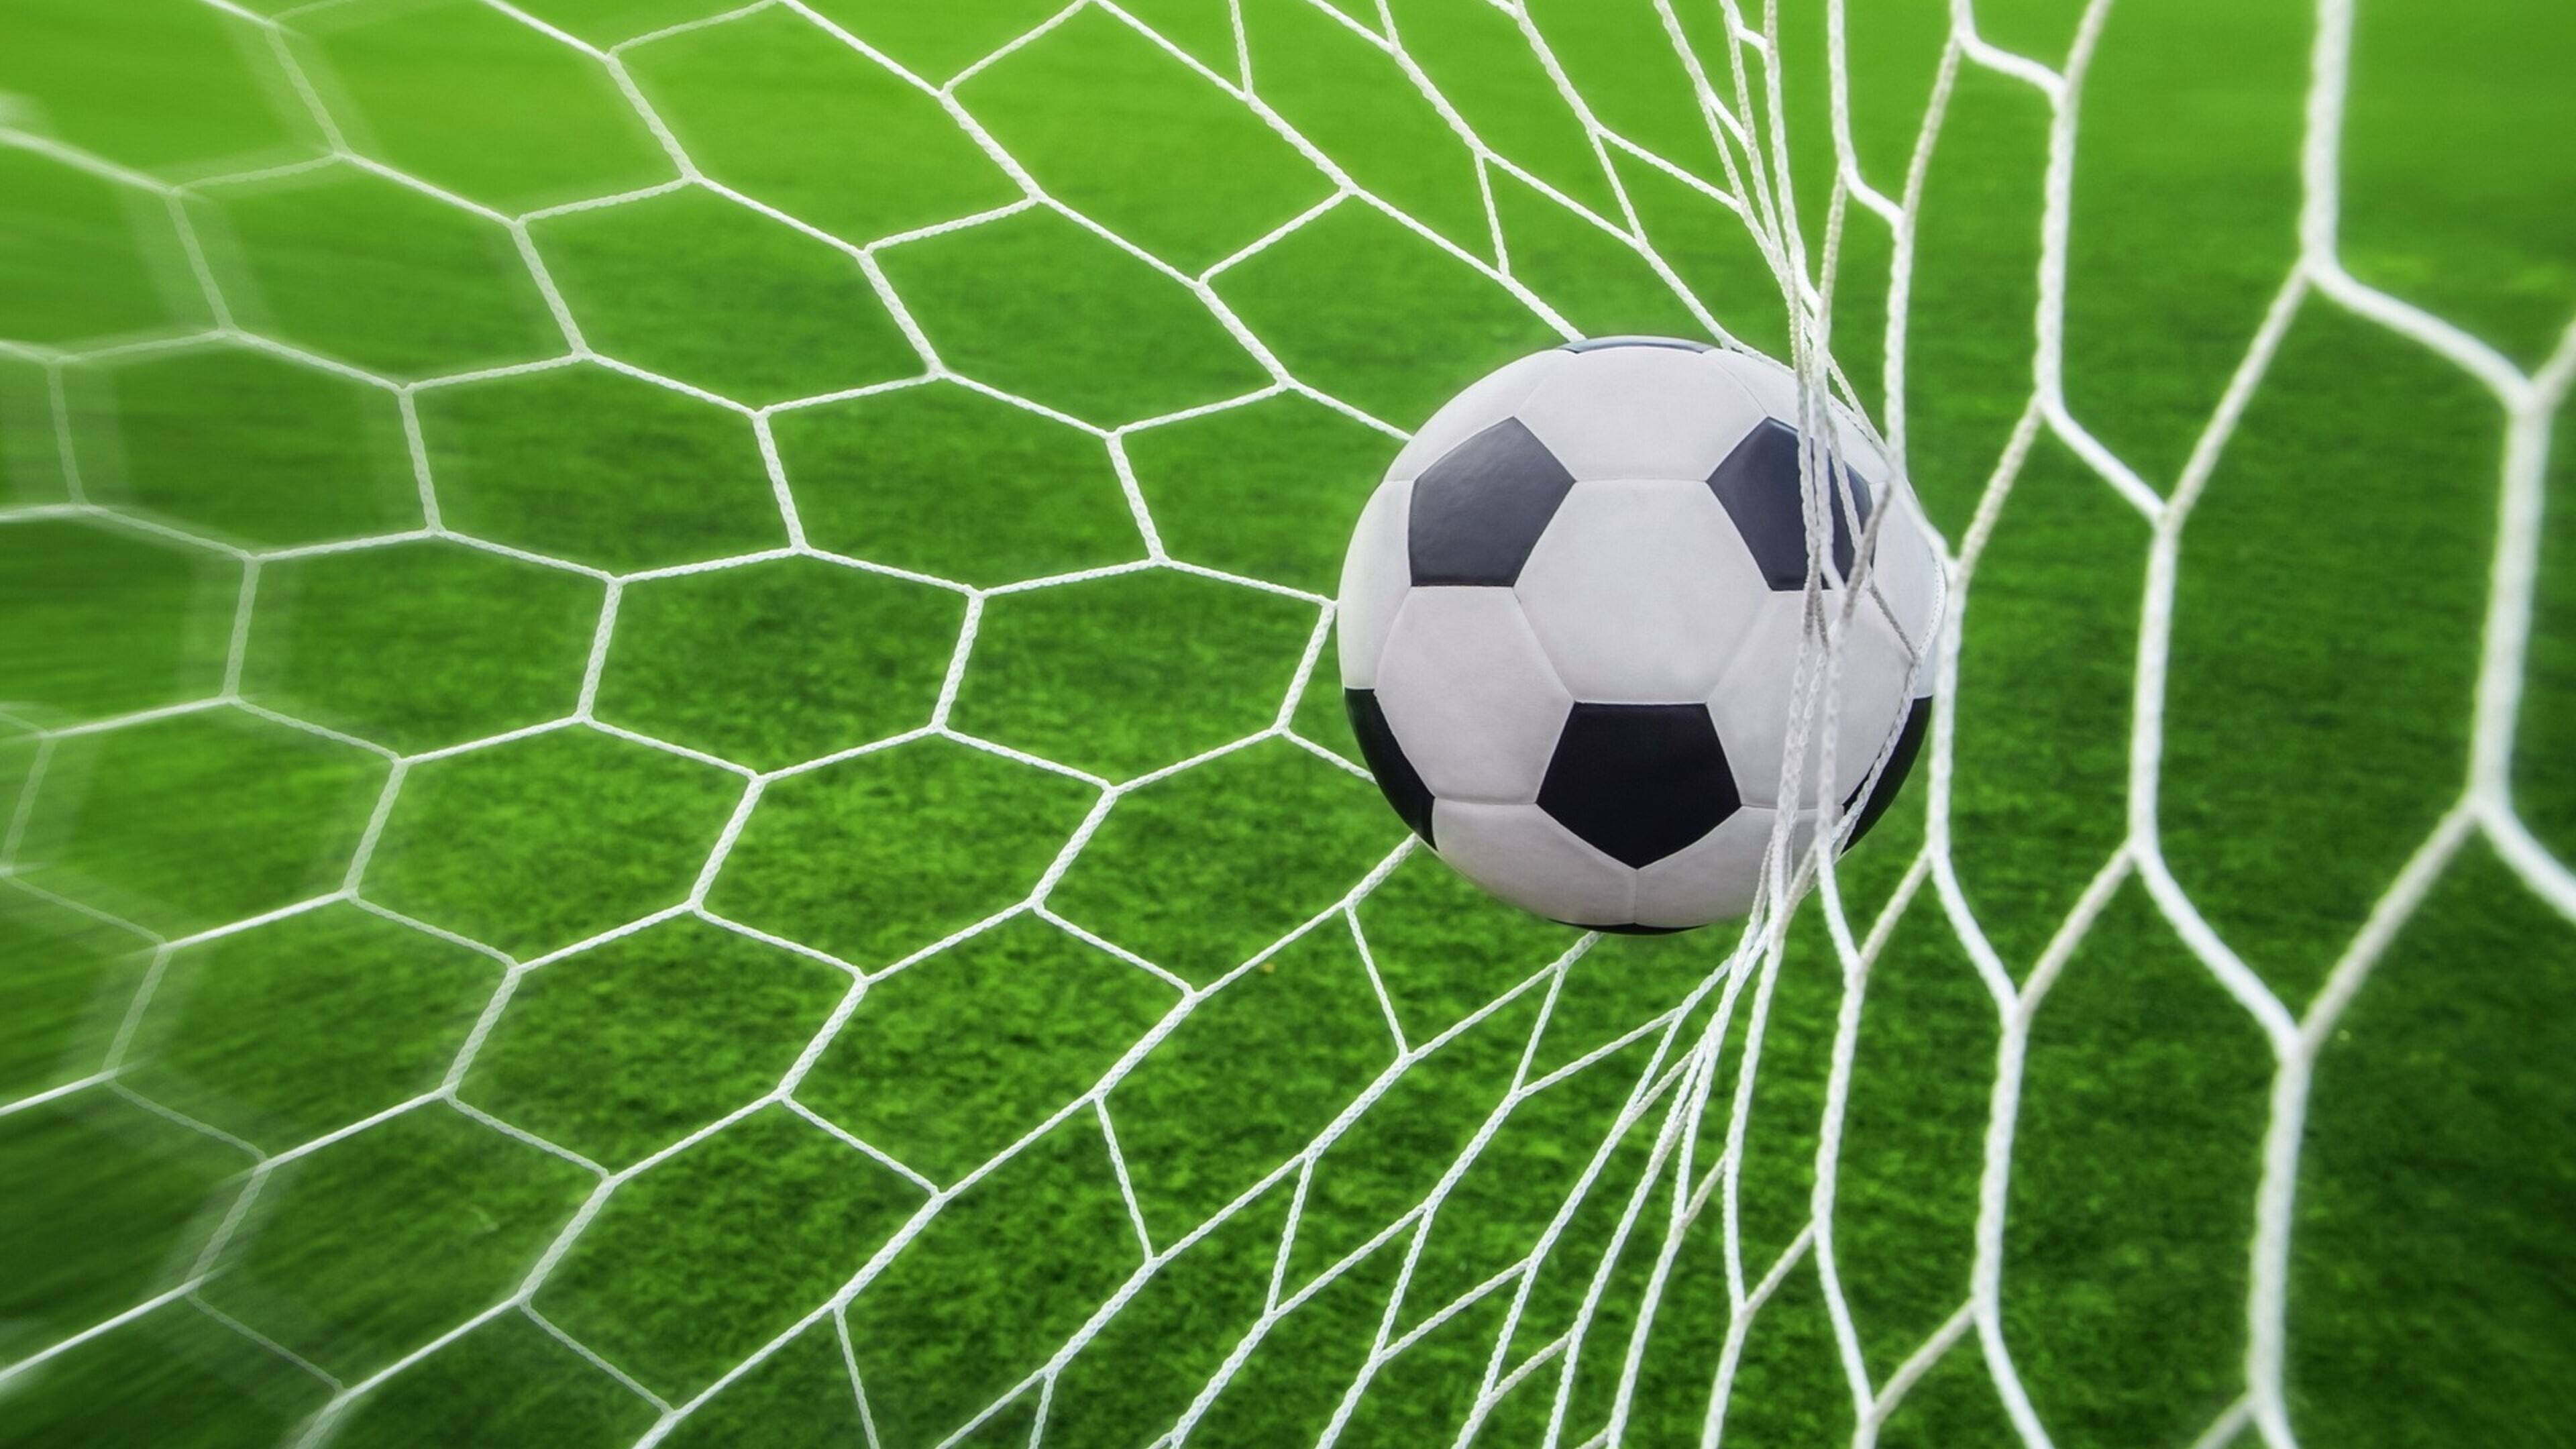 Goal (Sports): Football goal posts, Soccer net, Ball game, Black and white spherical truncated icosahedron pattern. 3840x2160 4K Wallpaper.